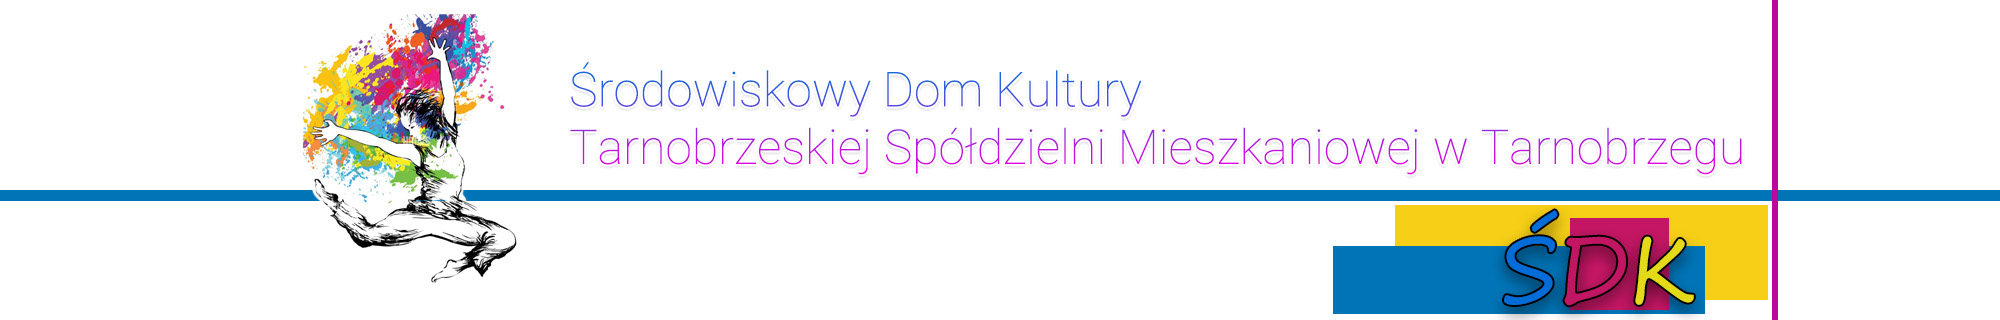 SDK_logo_mini